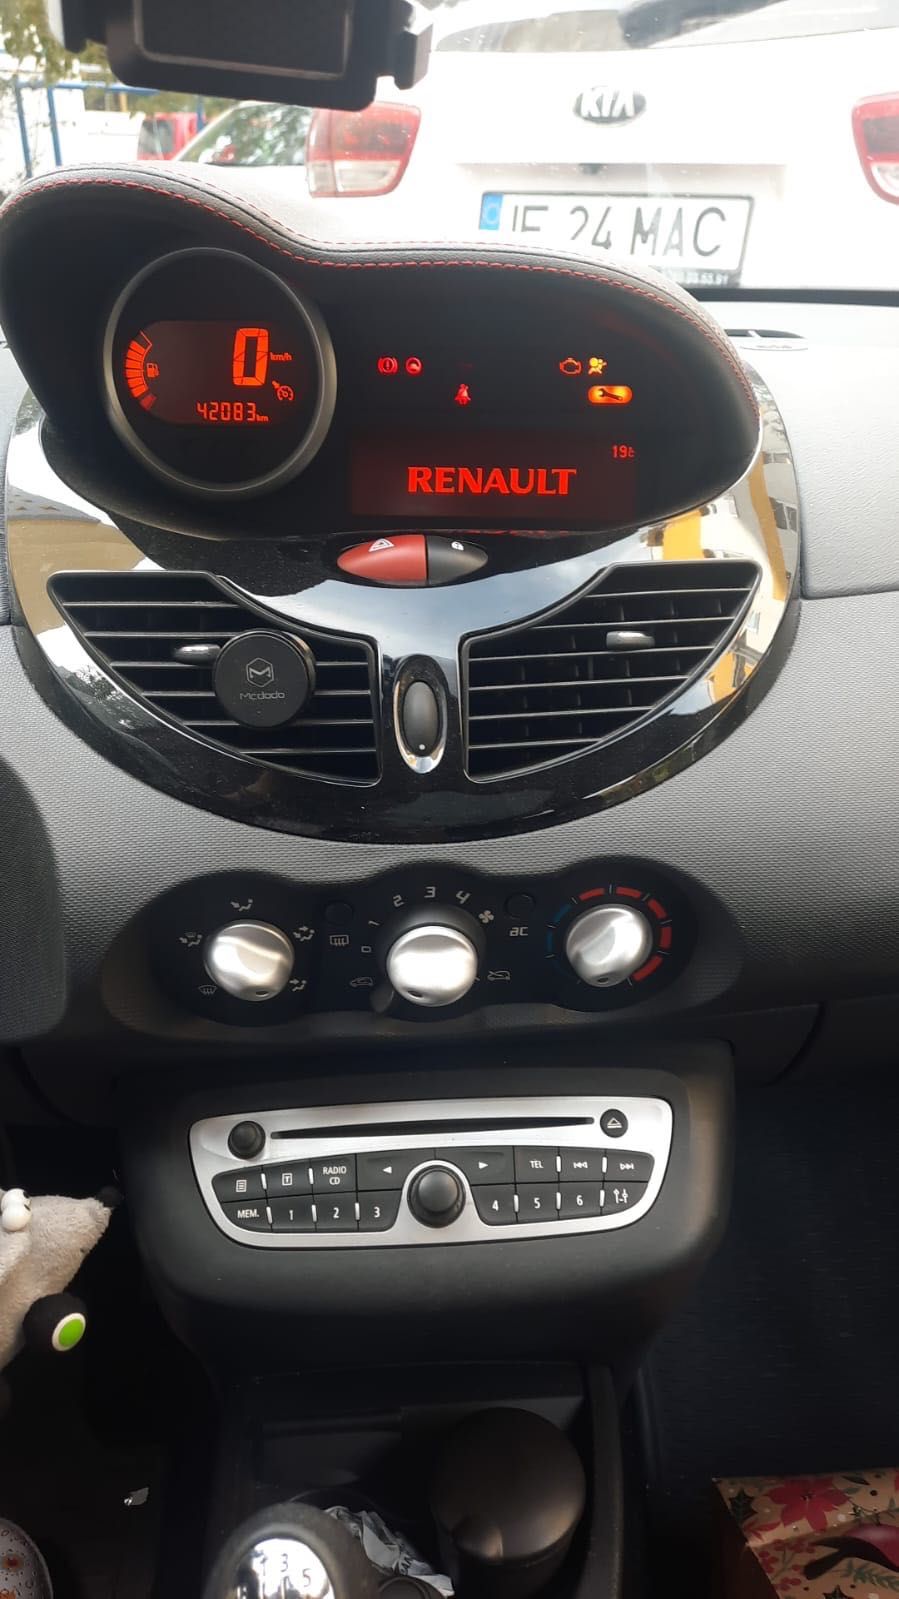 Renault Twingo, trapa panoramica